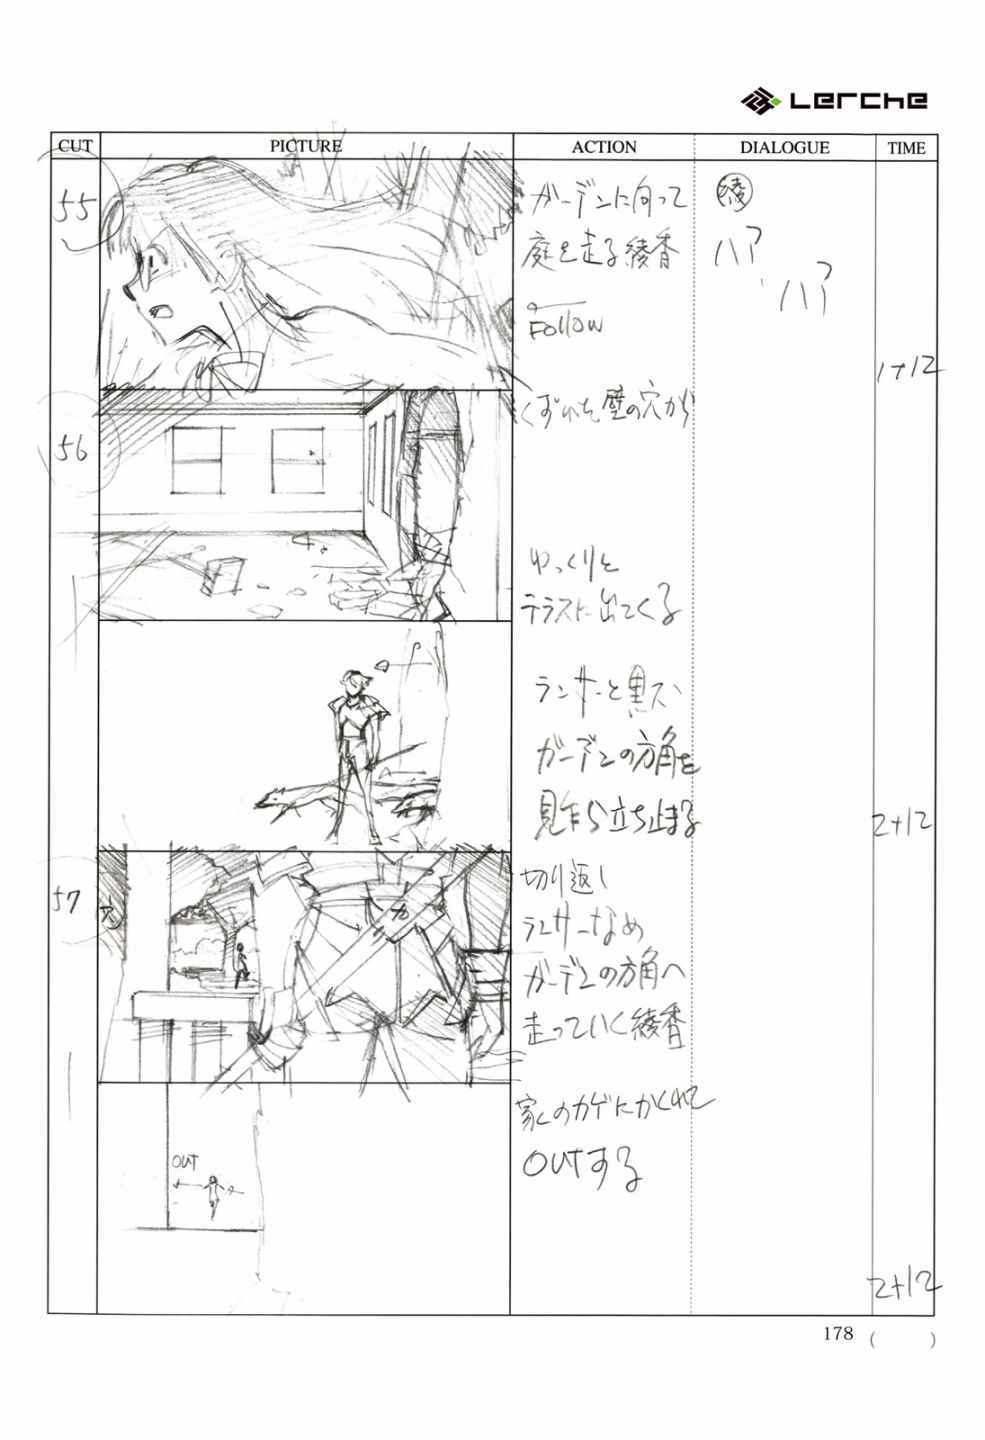 《Fate/Prototype官方画集》漫画 短篇